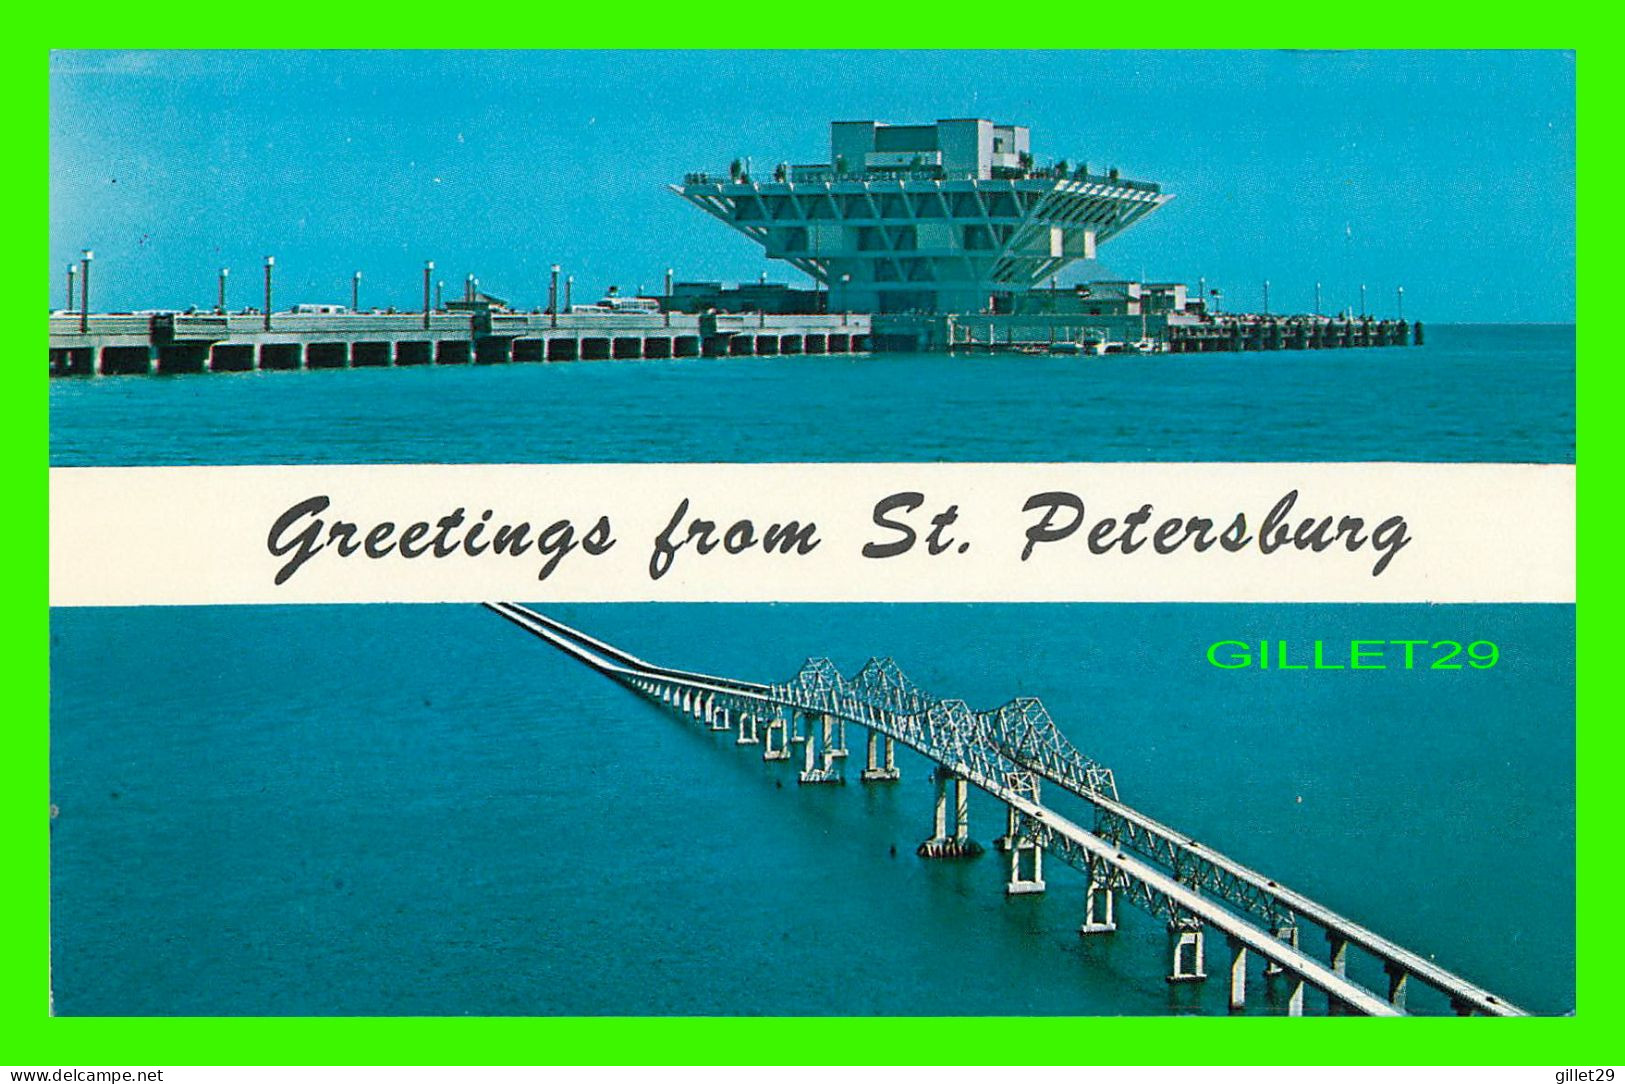 ST PETERSBURG, FL - THE PIER & SUNSHINE SKYWAY - 1984 FNC INC - - St Petersburg